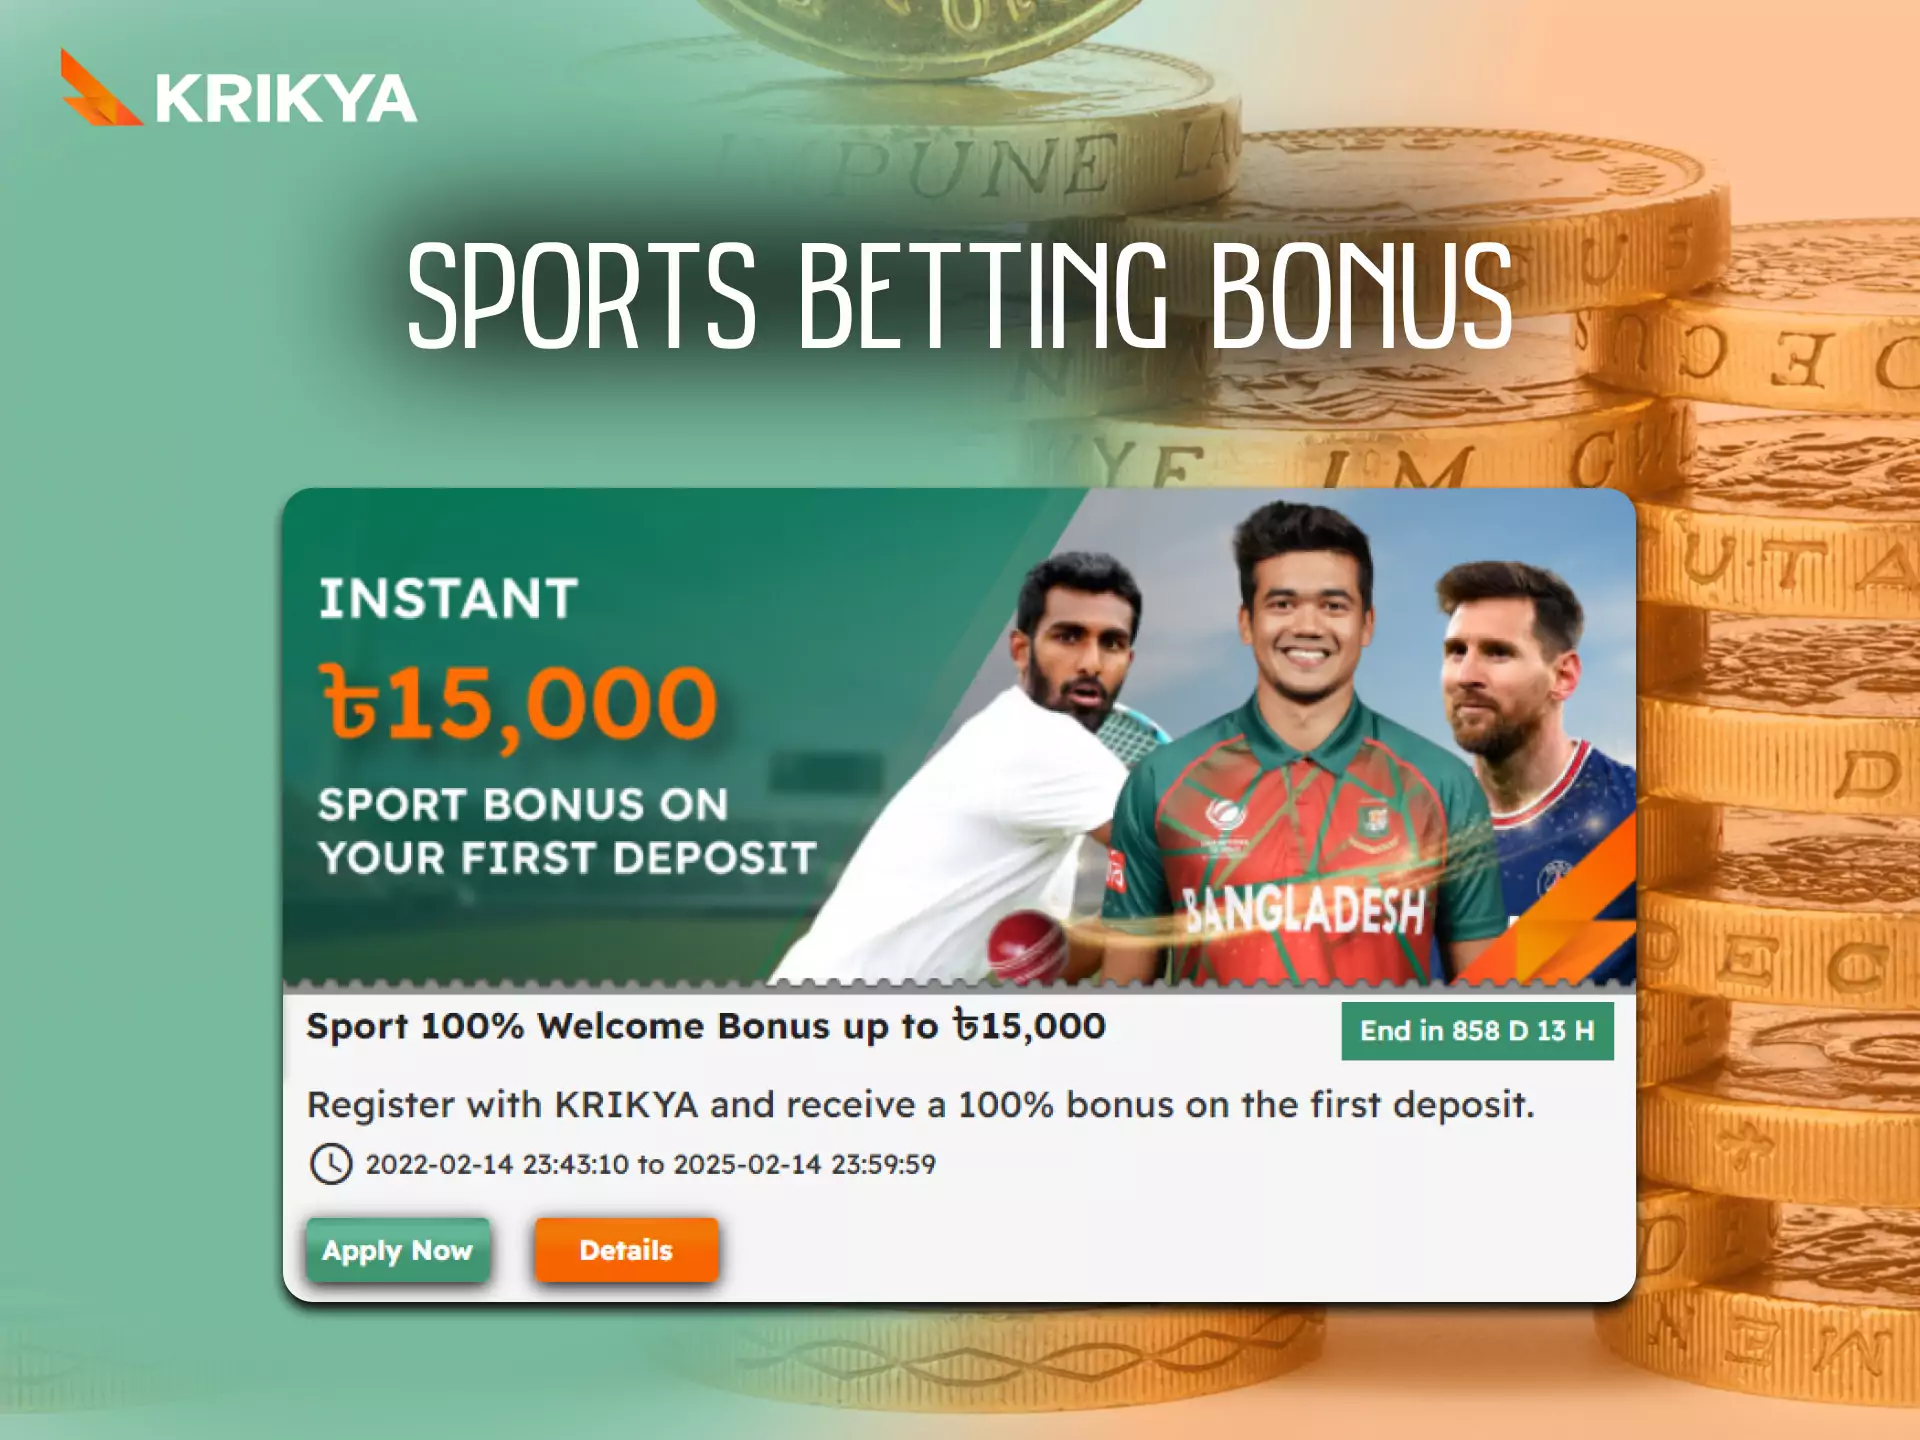 Krikya has a special bonus for sports betting.